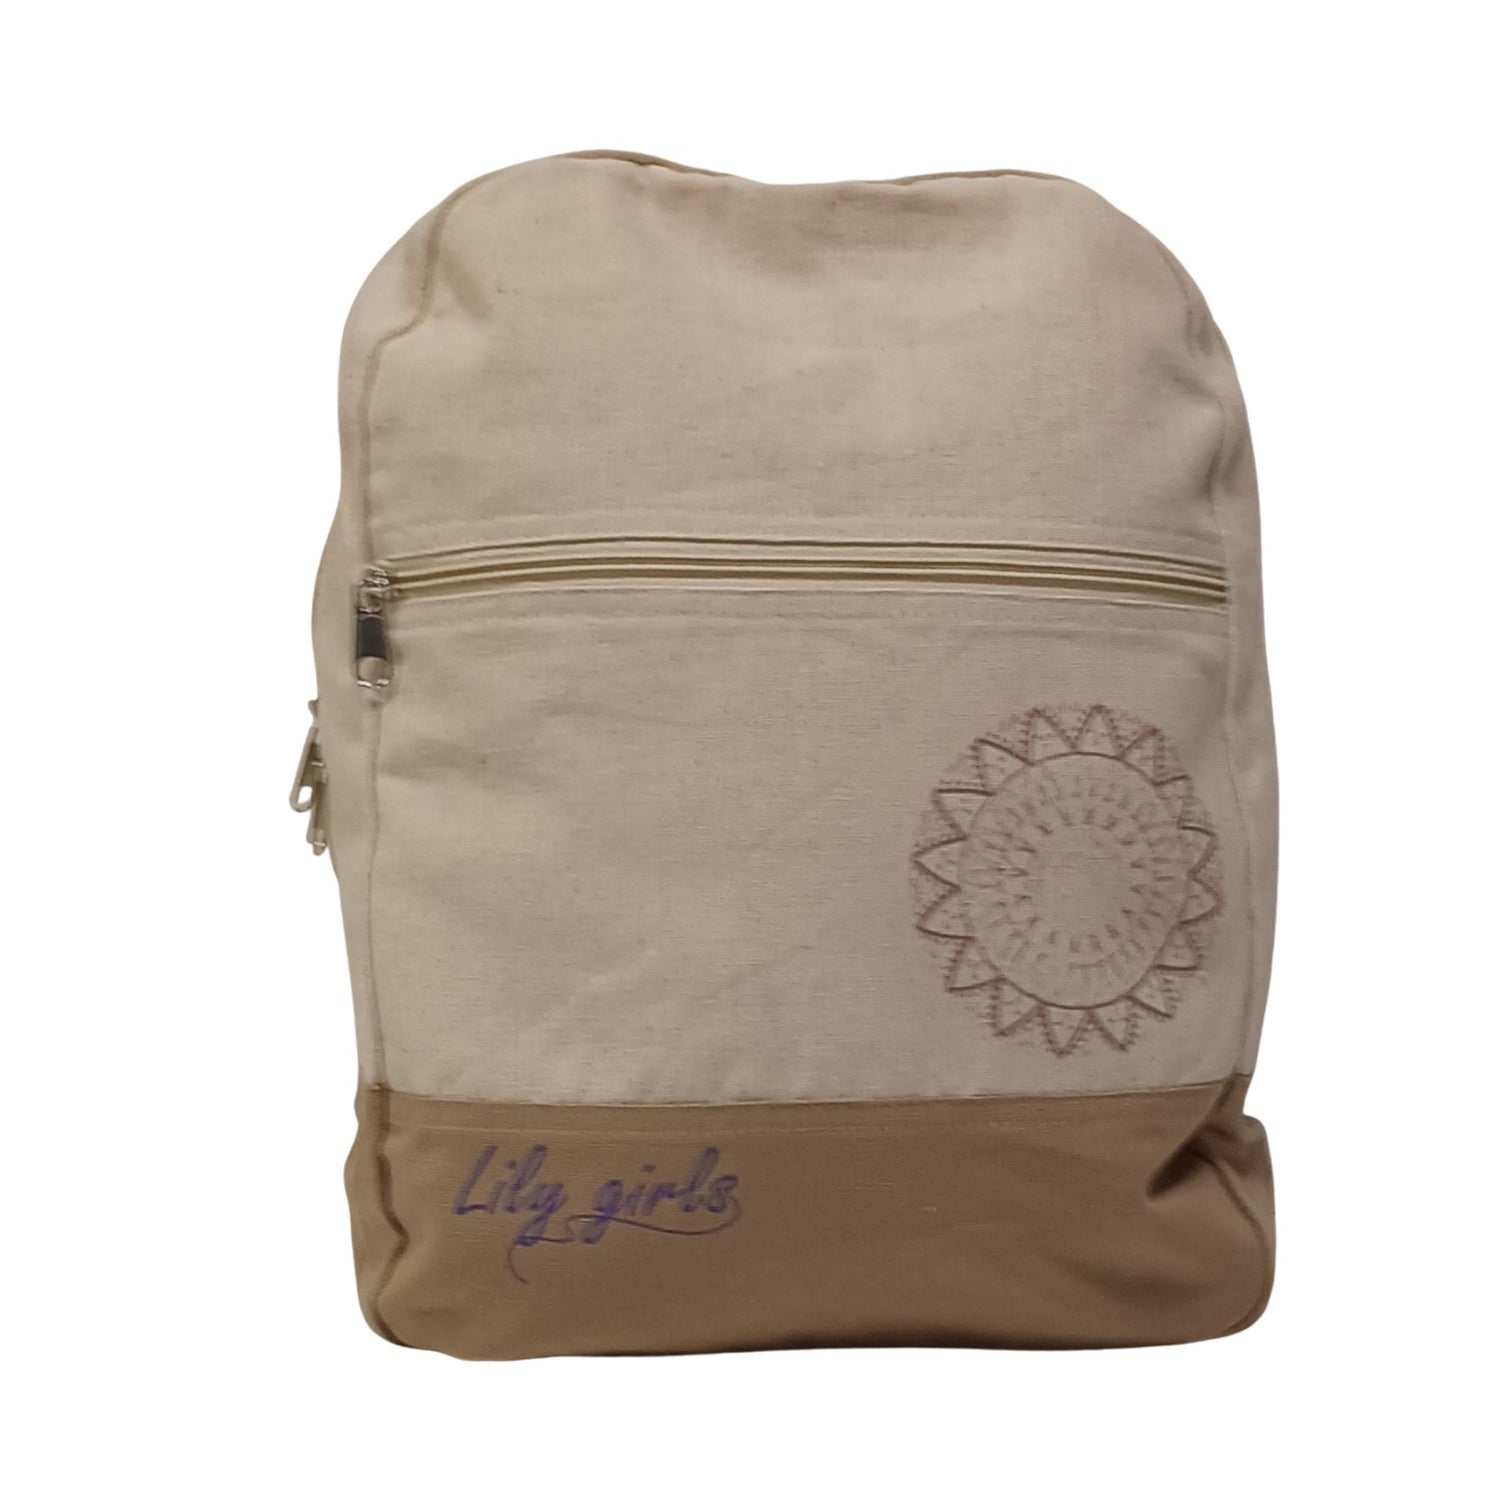 Fabric backpacks